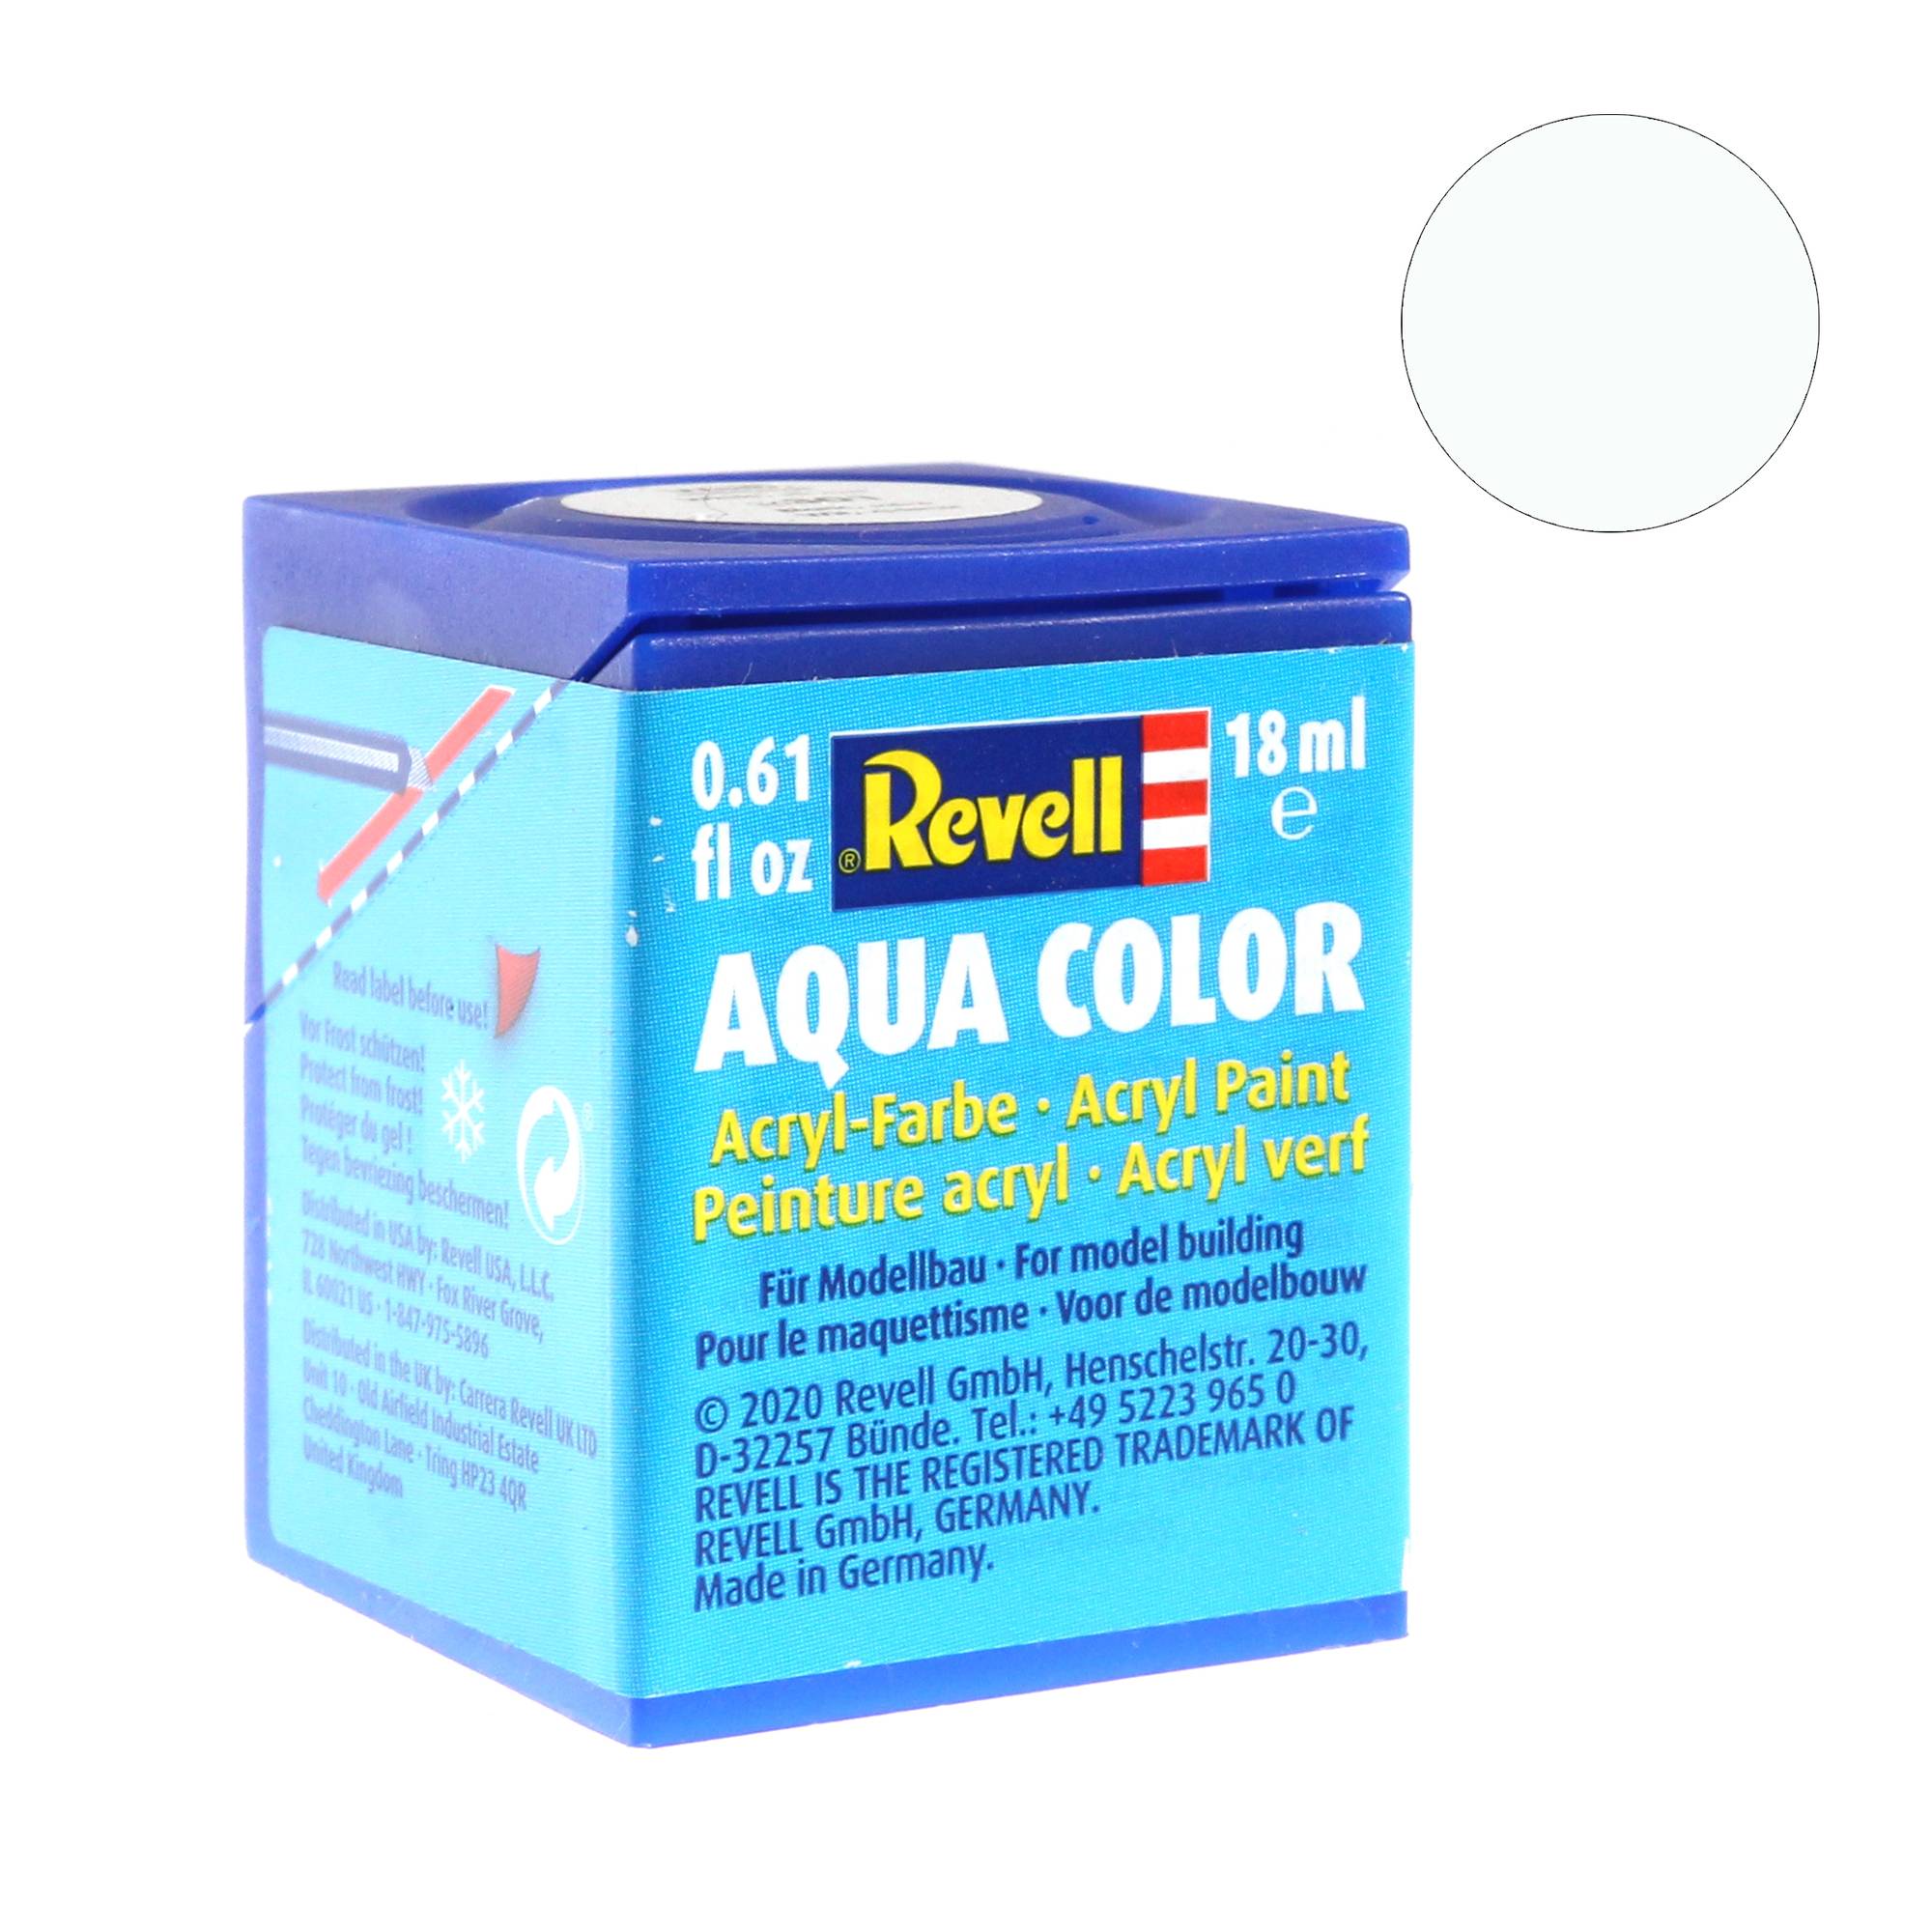 Revell White Gloss Aqua Colour Acrylic Paint 18ml (104)